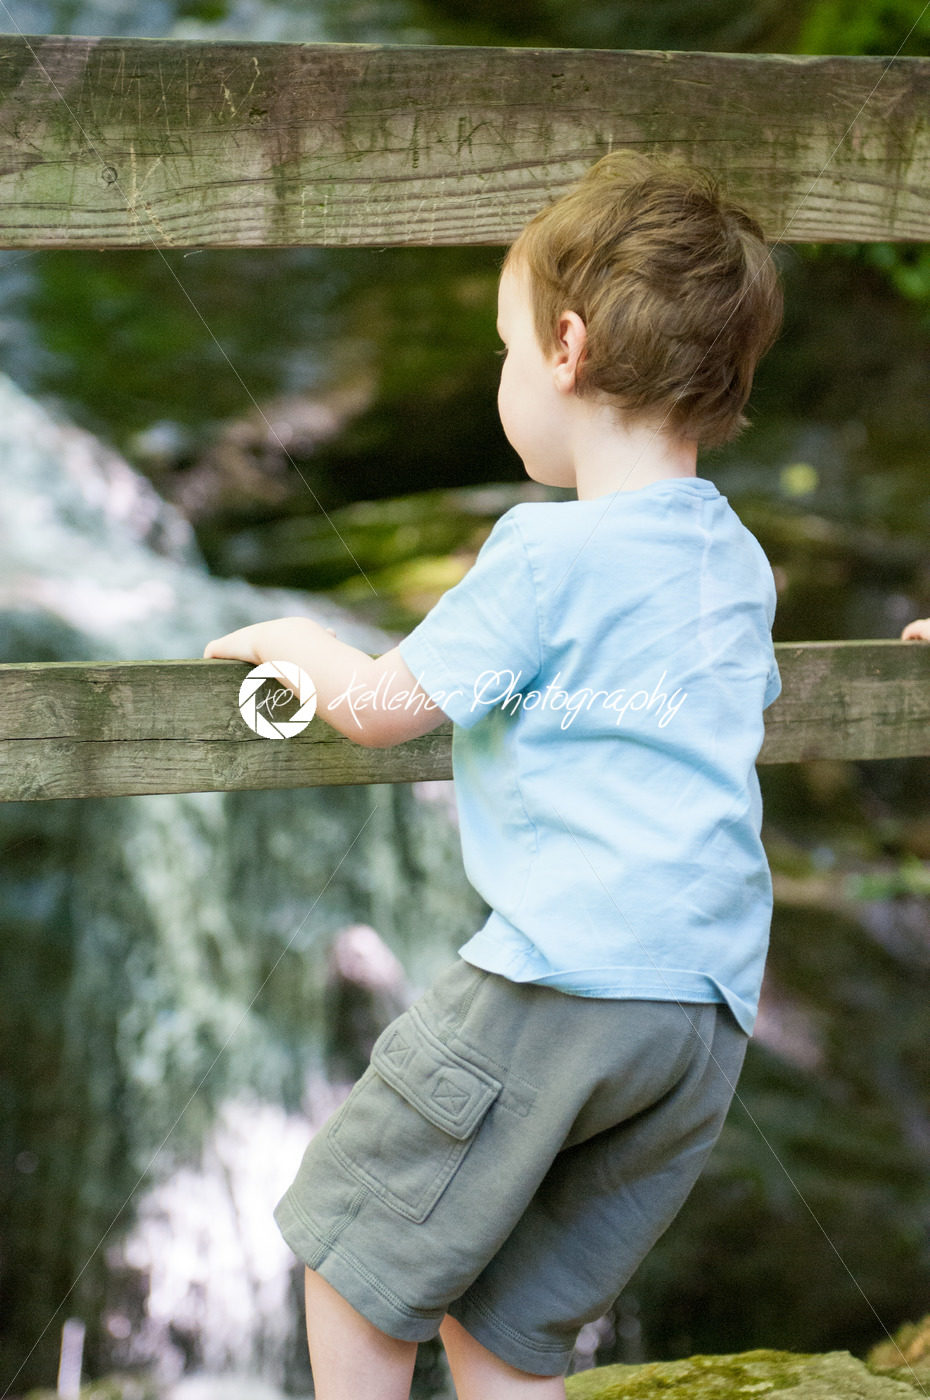 Boy looking at Crabtree Falls along the Blue Ridge Parkway near Asheville North Carolina - Kelleher Photography Store